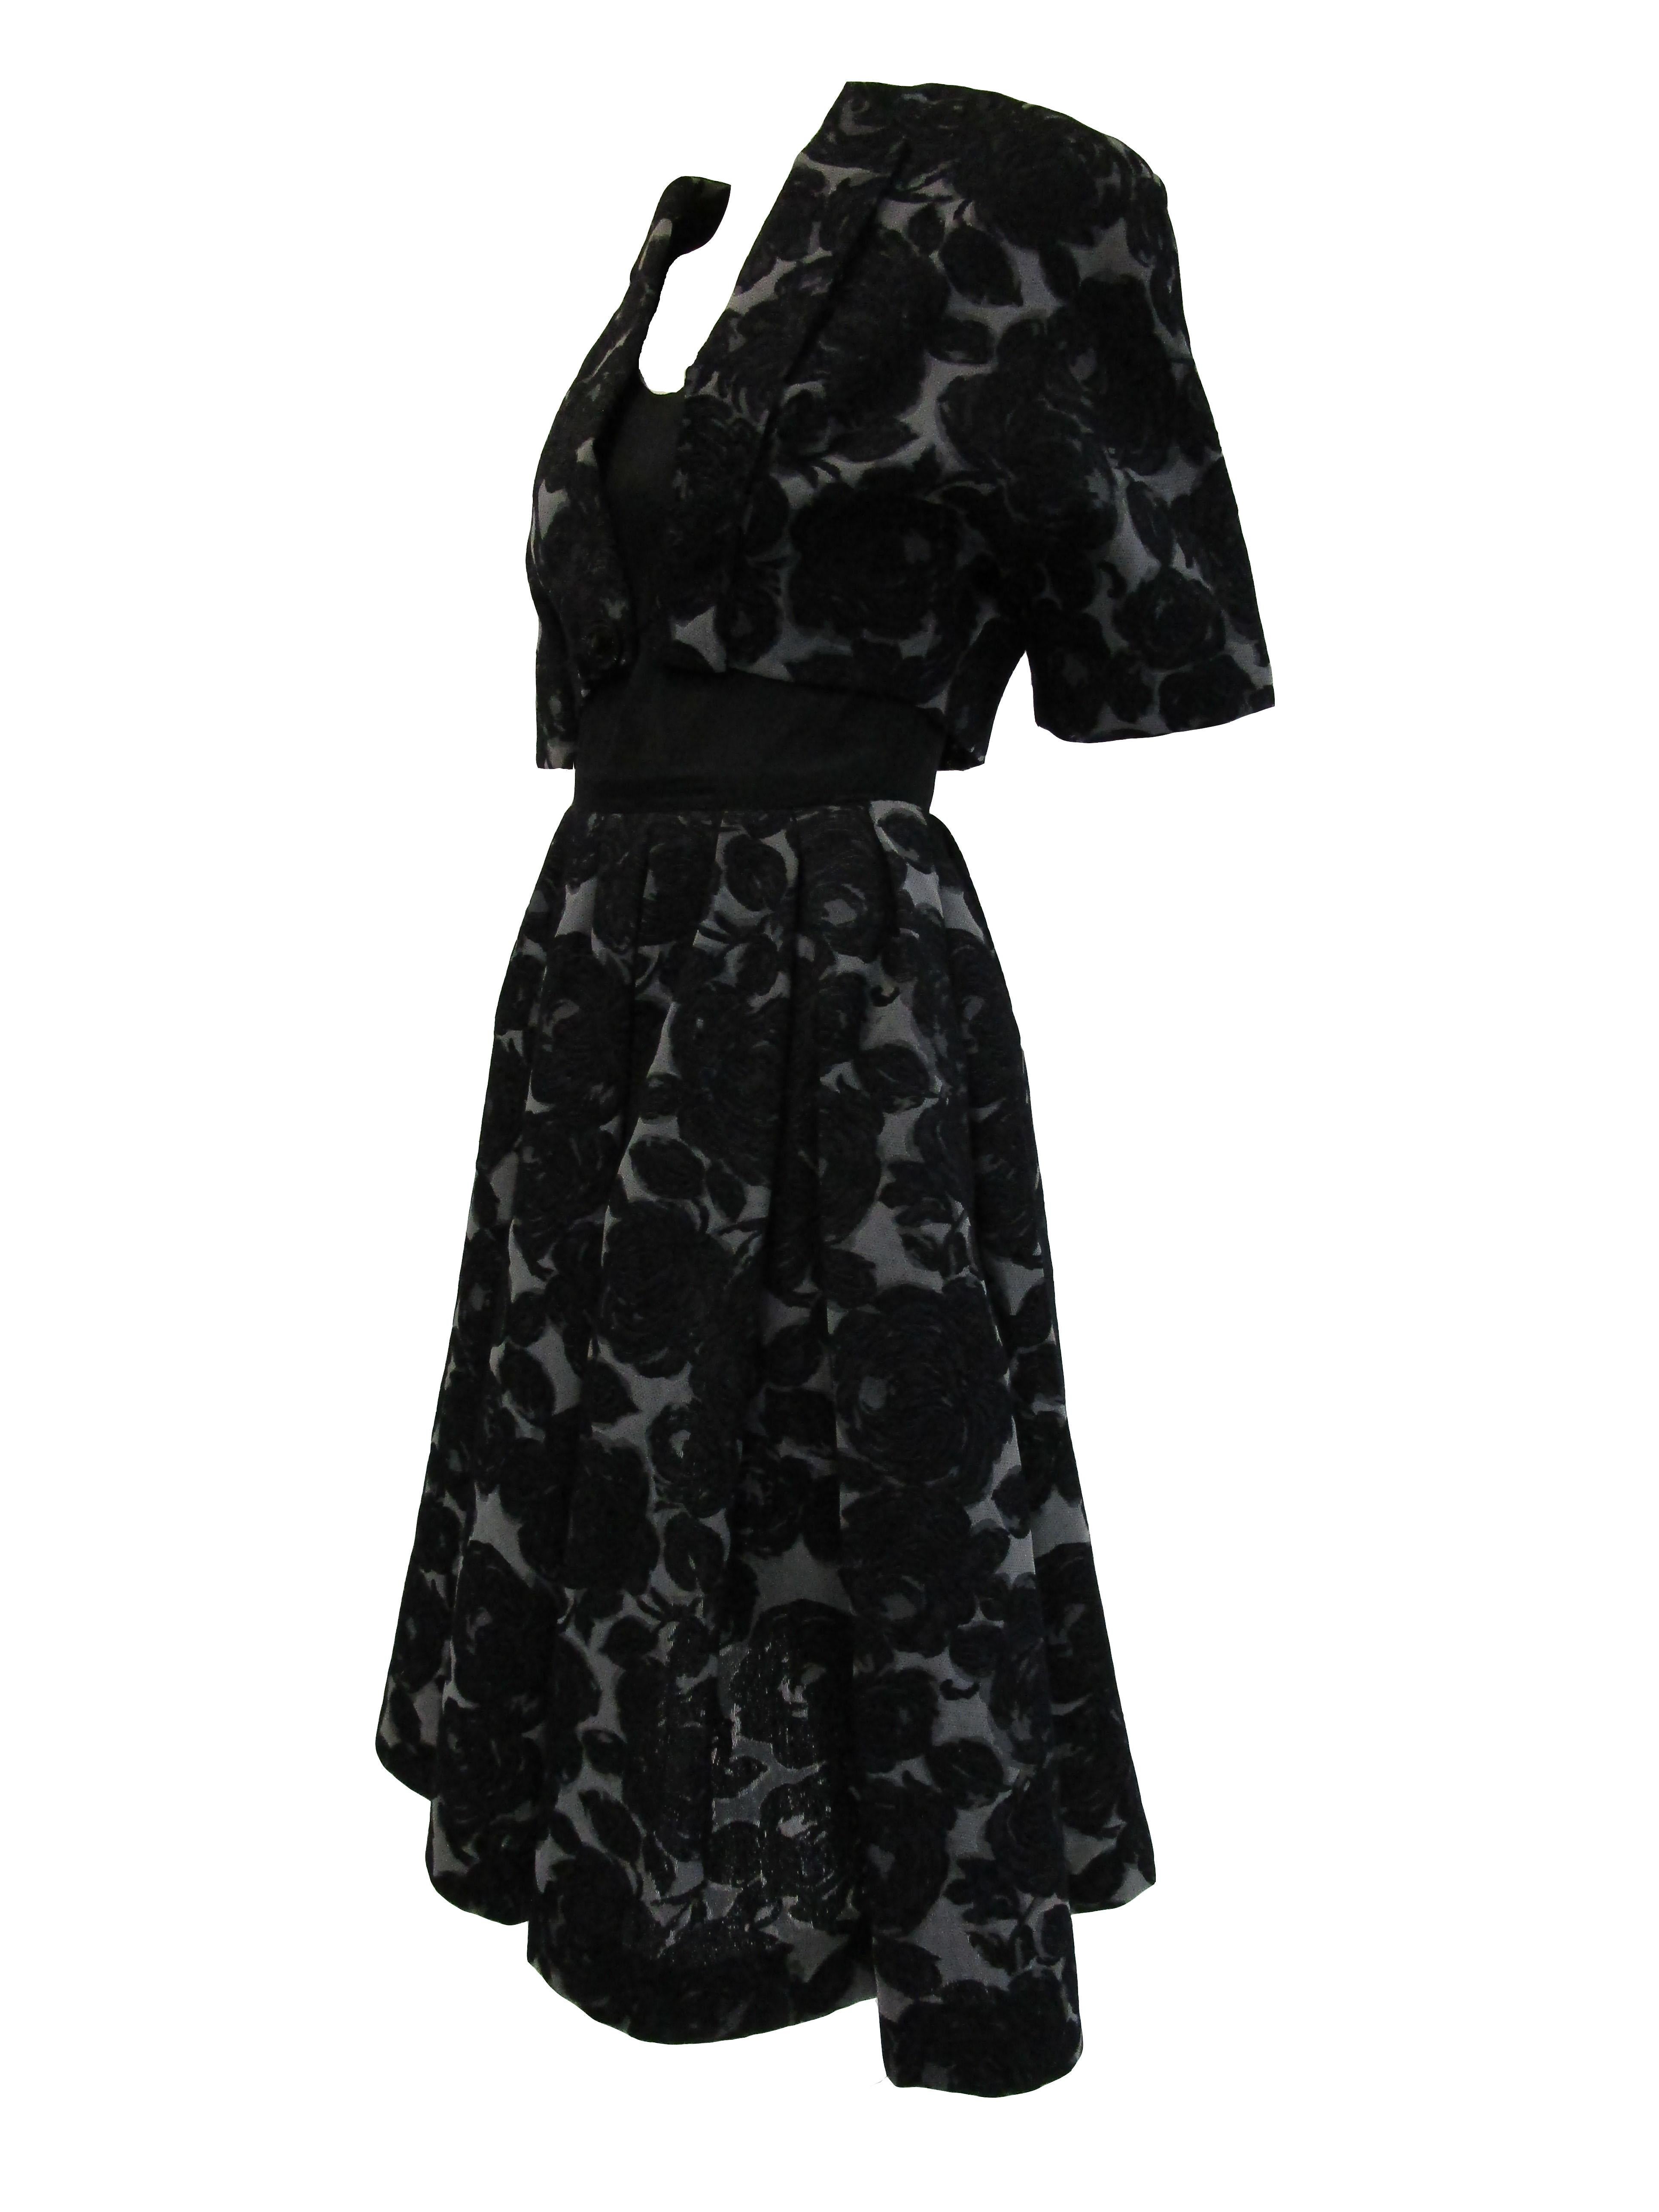 Rare 1950s Madame Gres licensed Black & Grey Embroidered Dress w/ Bolero Jacket For Sale 4